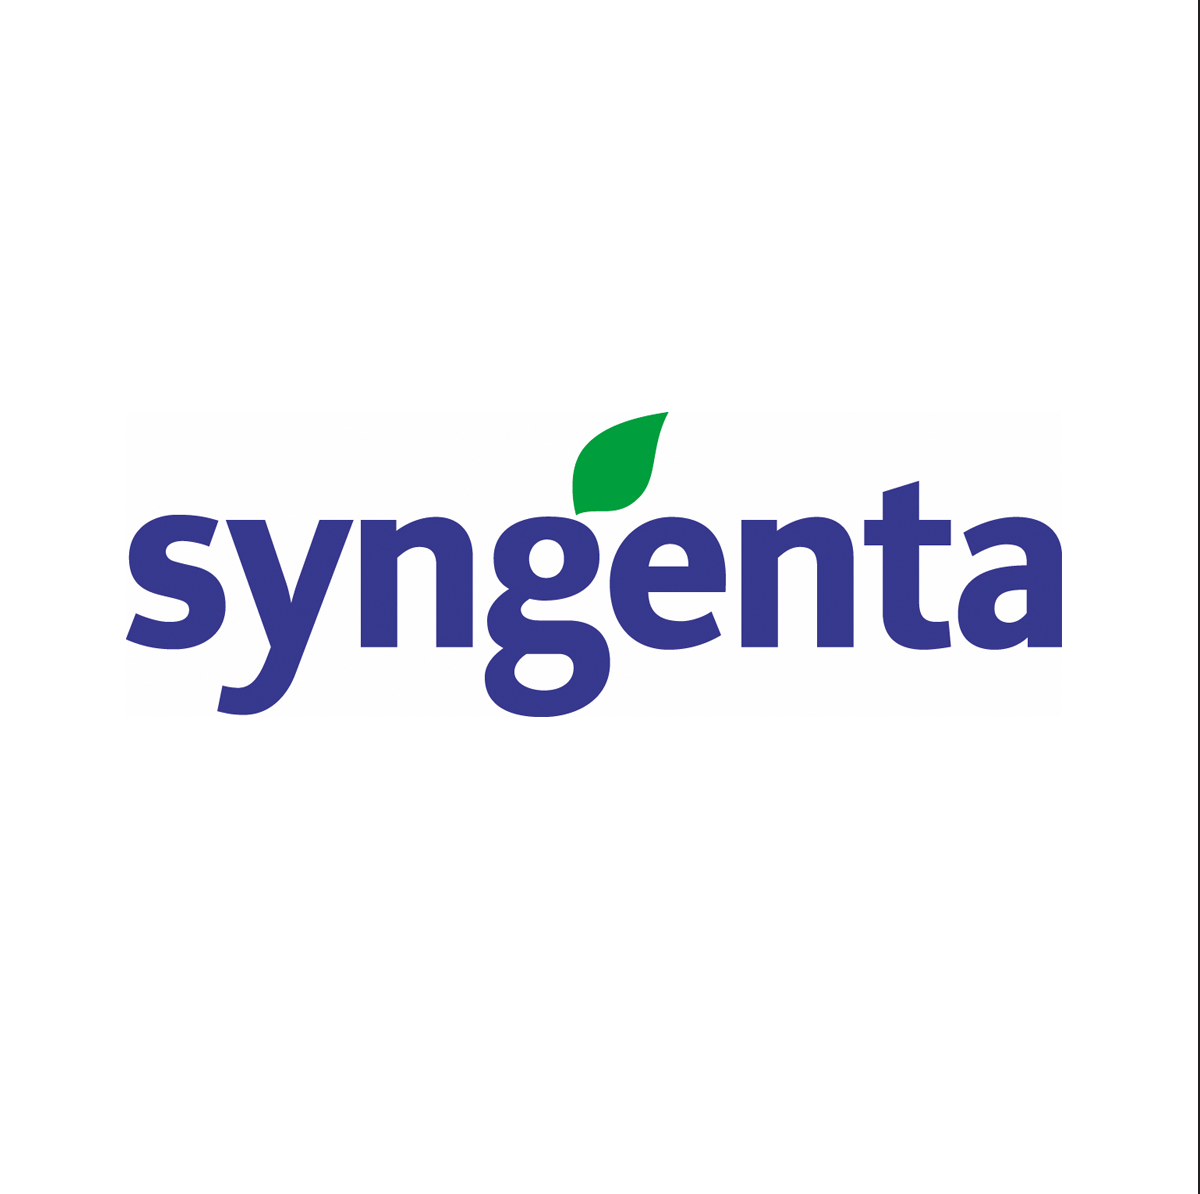 Displaying Image For Syngenta Logo Pictureicon